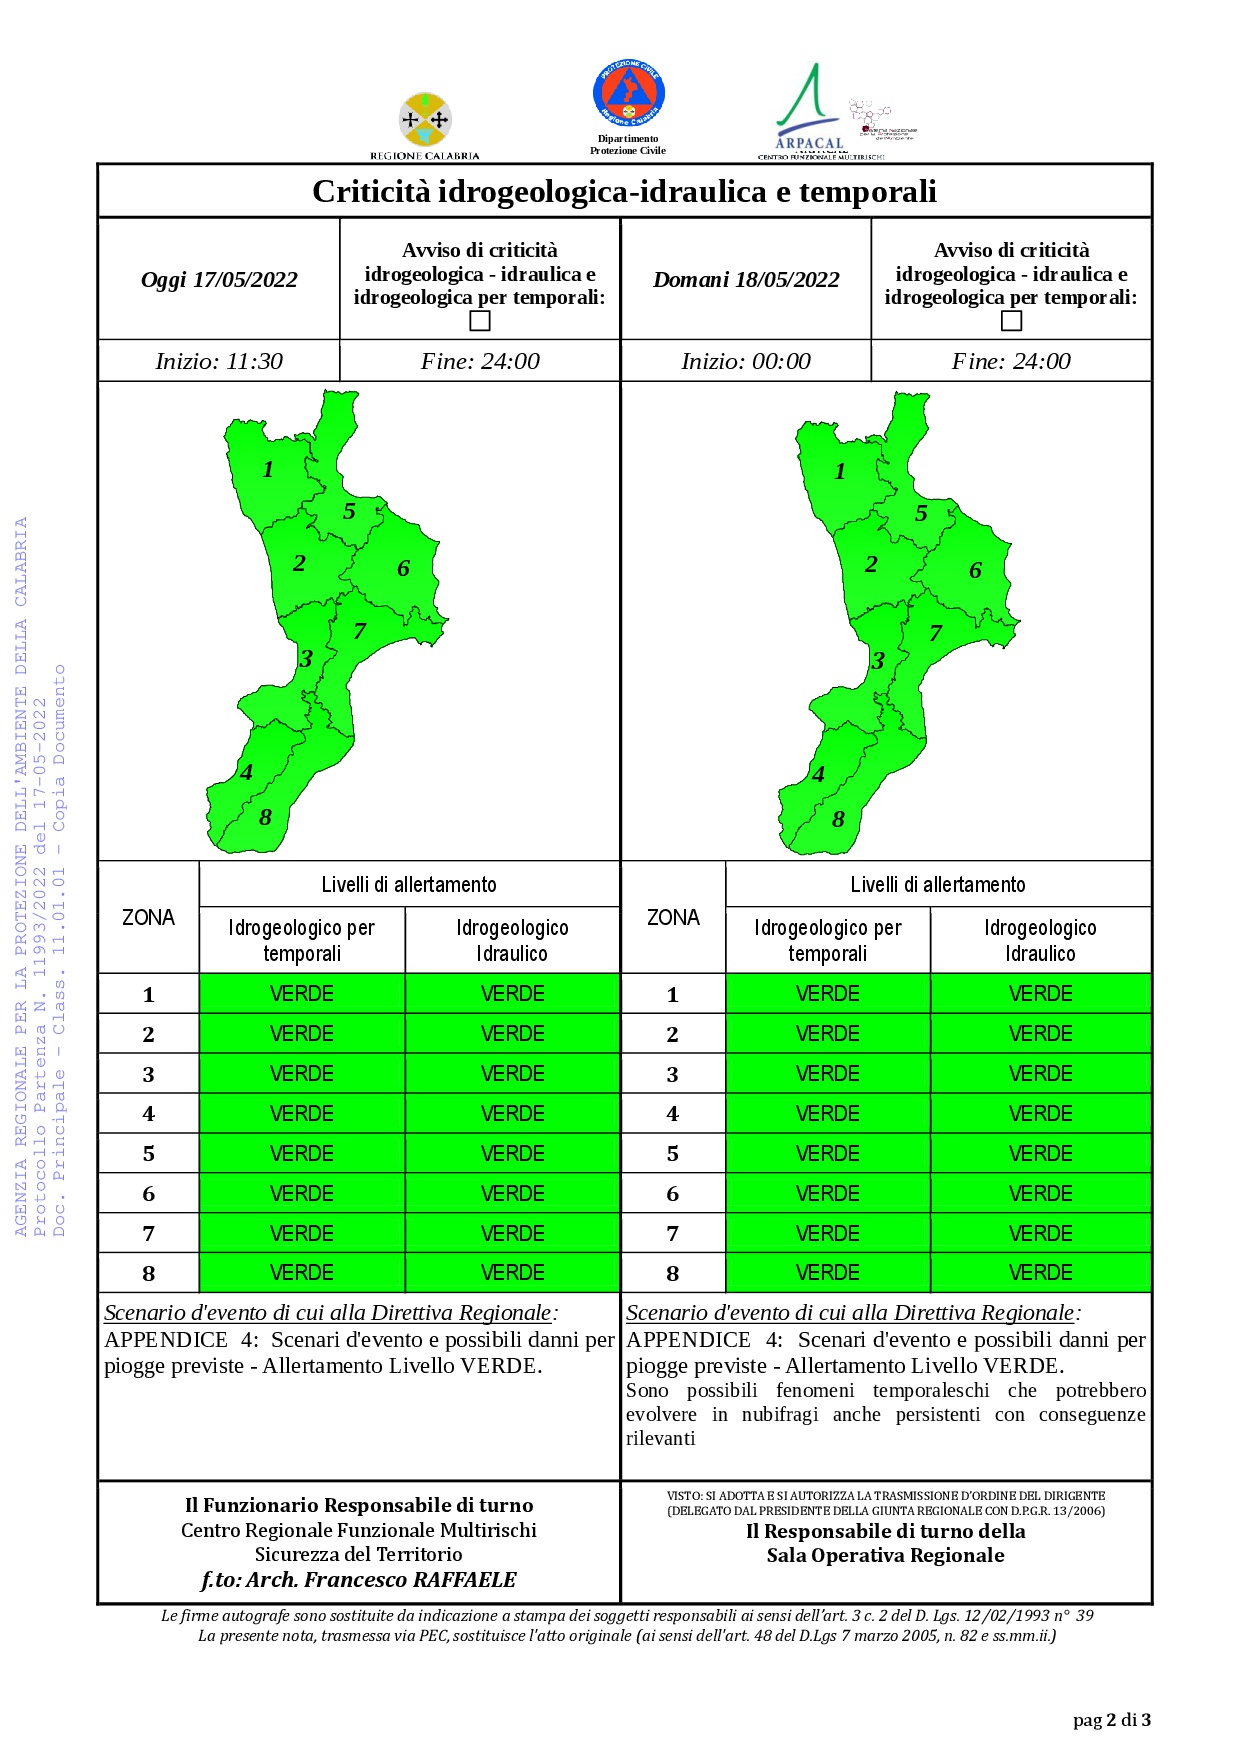 Criticità idrogeologica-idraulica e temporali in Calabria 17-05-2022